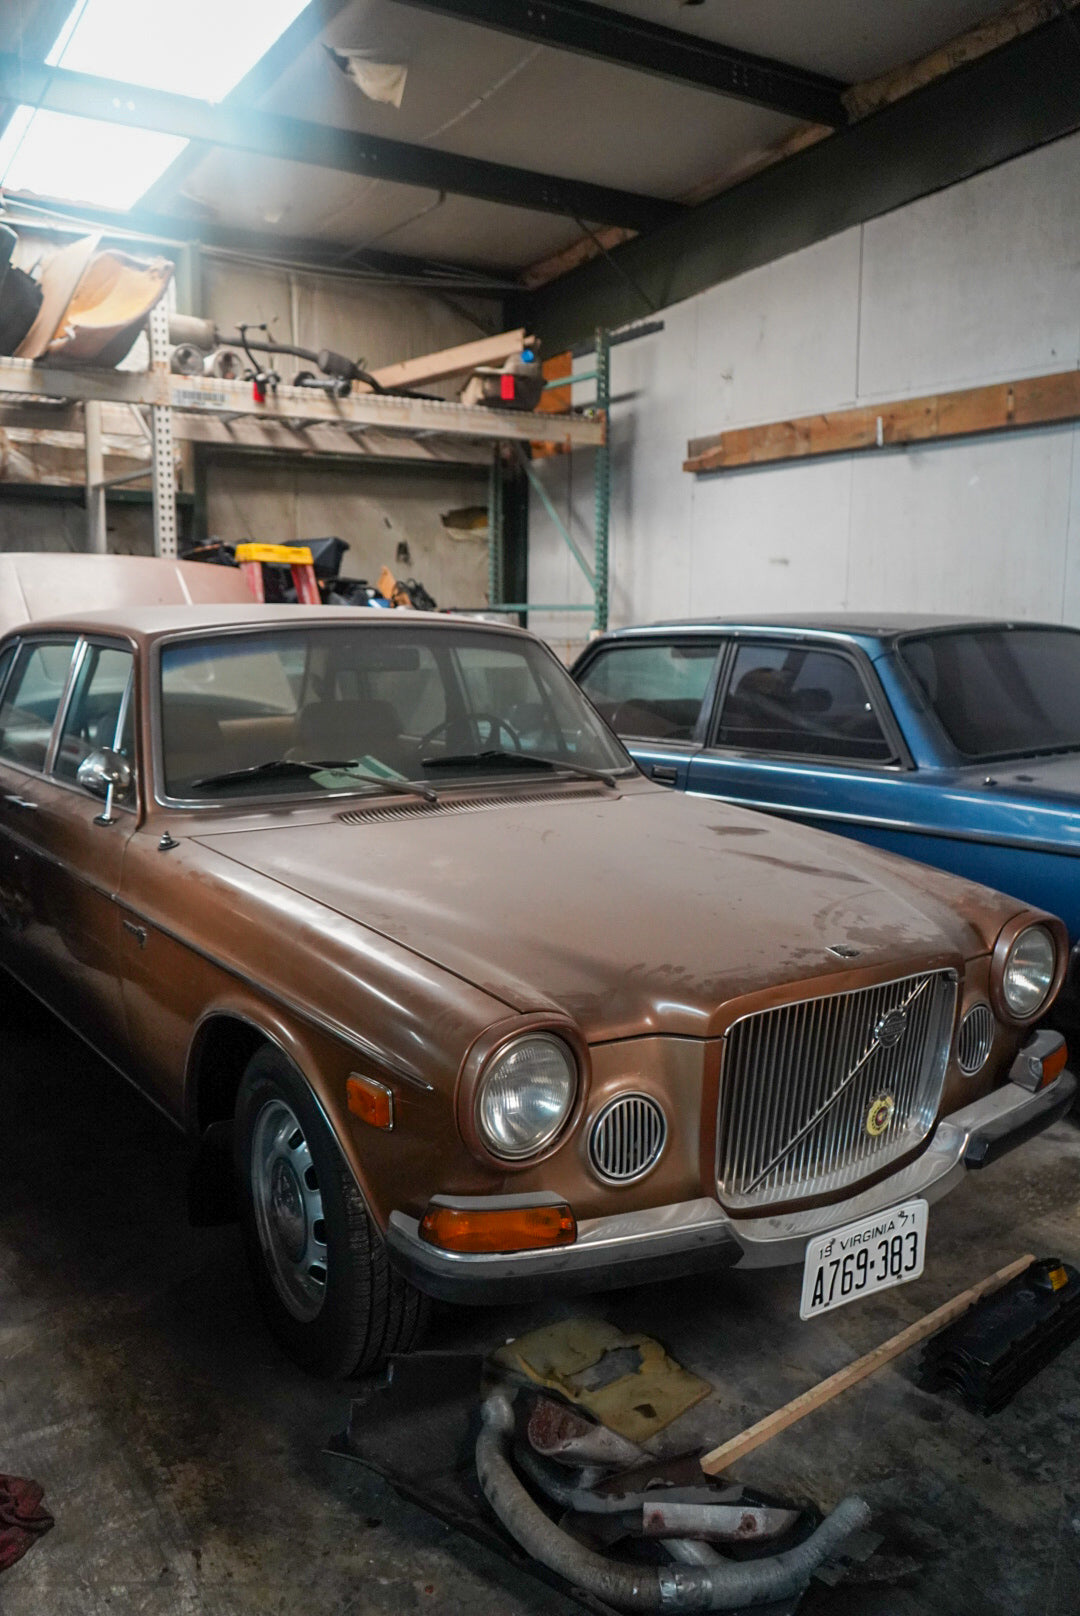 1971 Volvo 164 - $12000